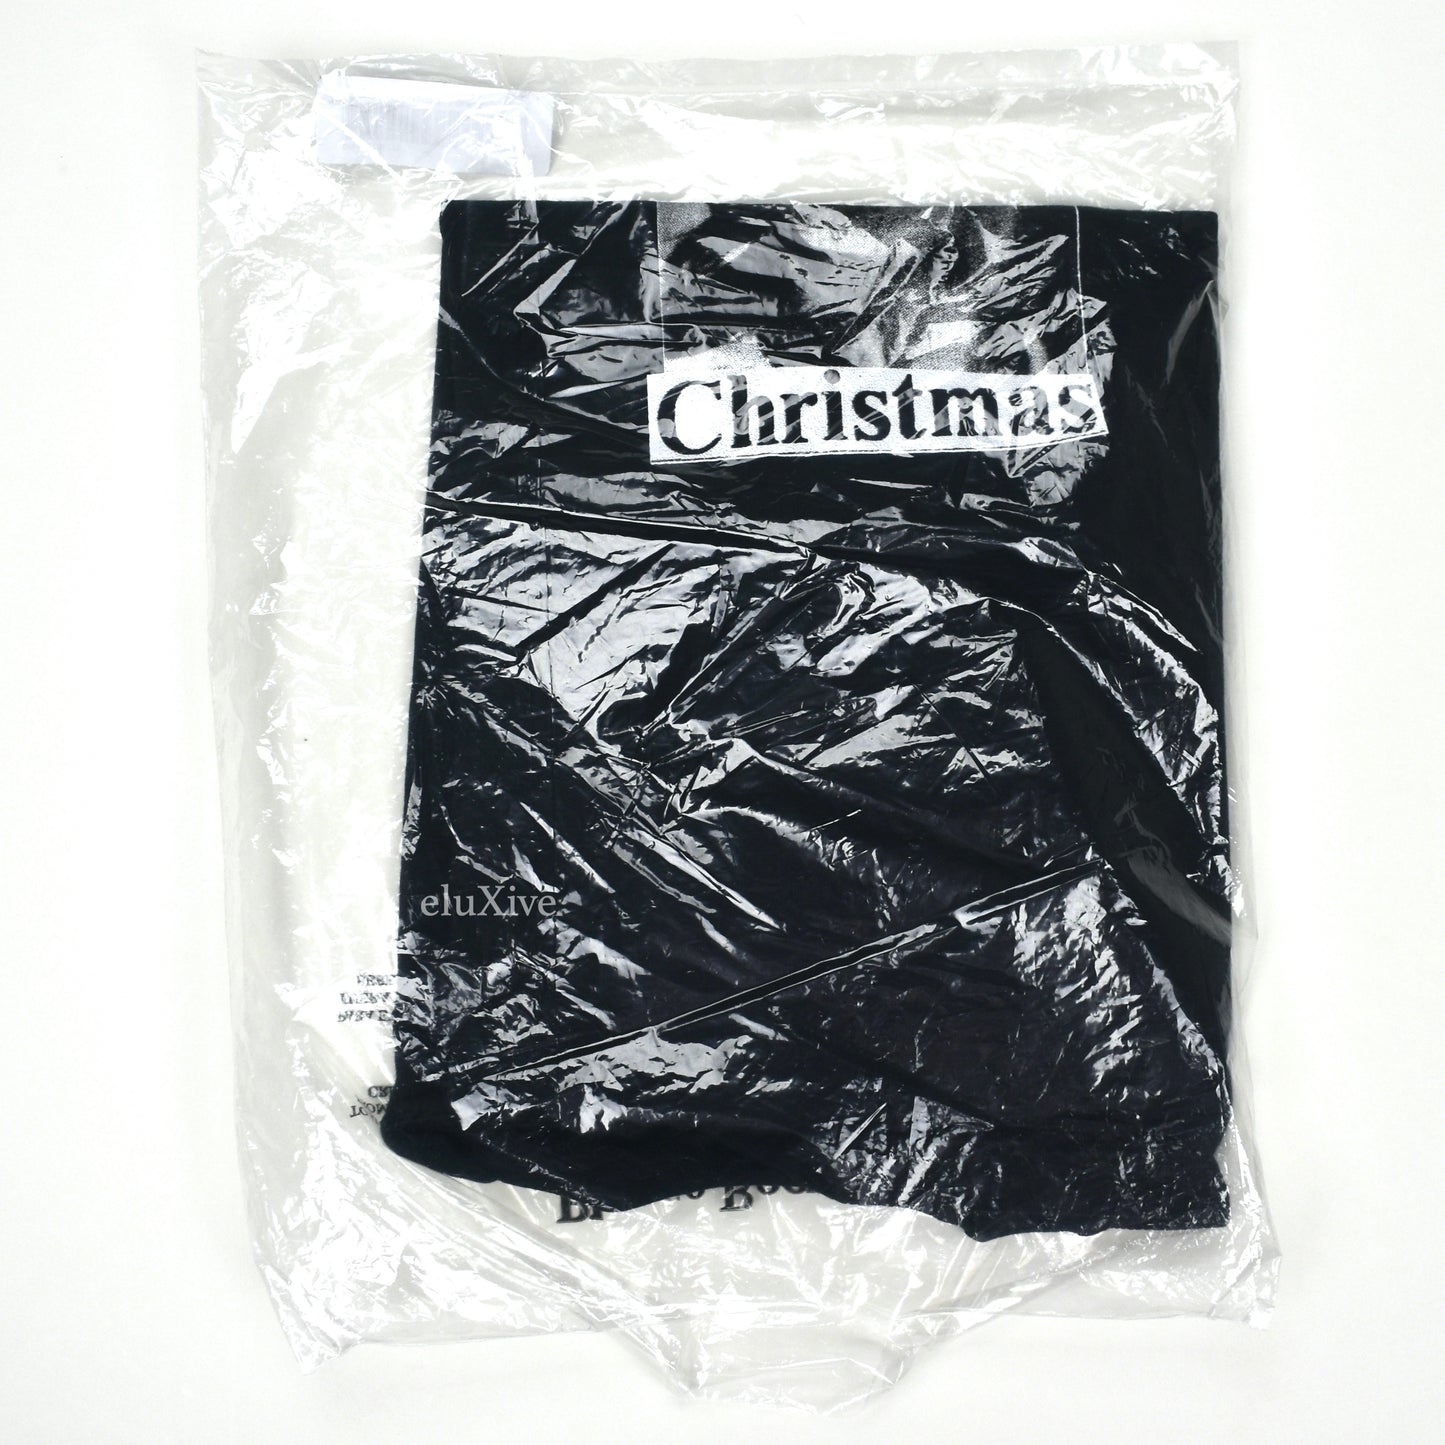 Supreme - Cigarette Christmas T-Shirt (Black)